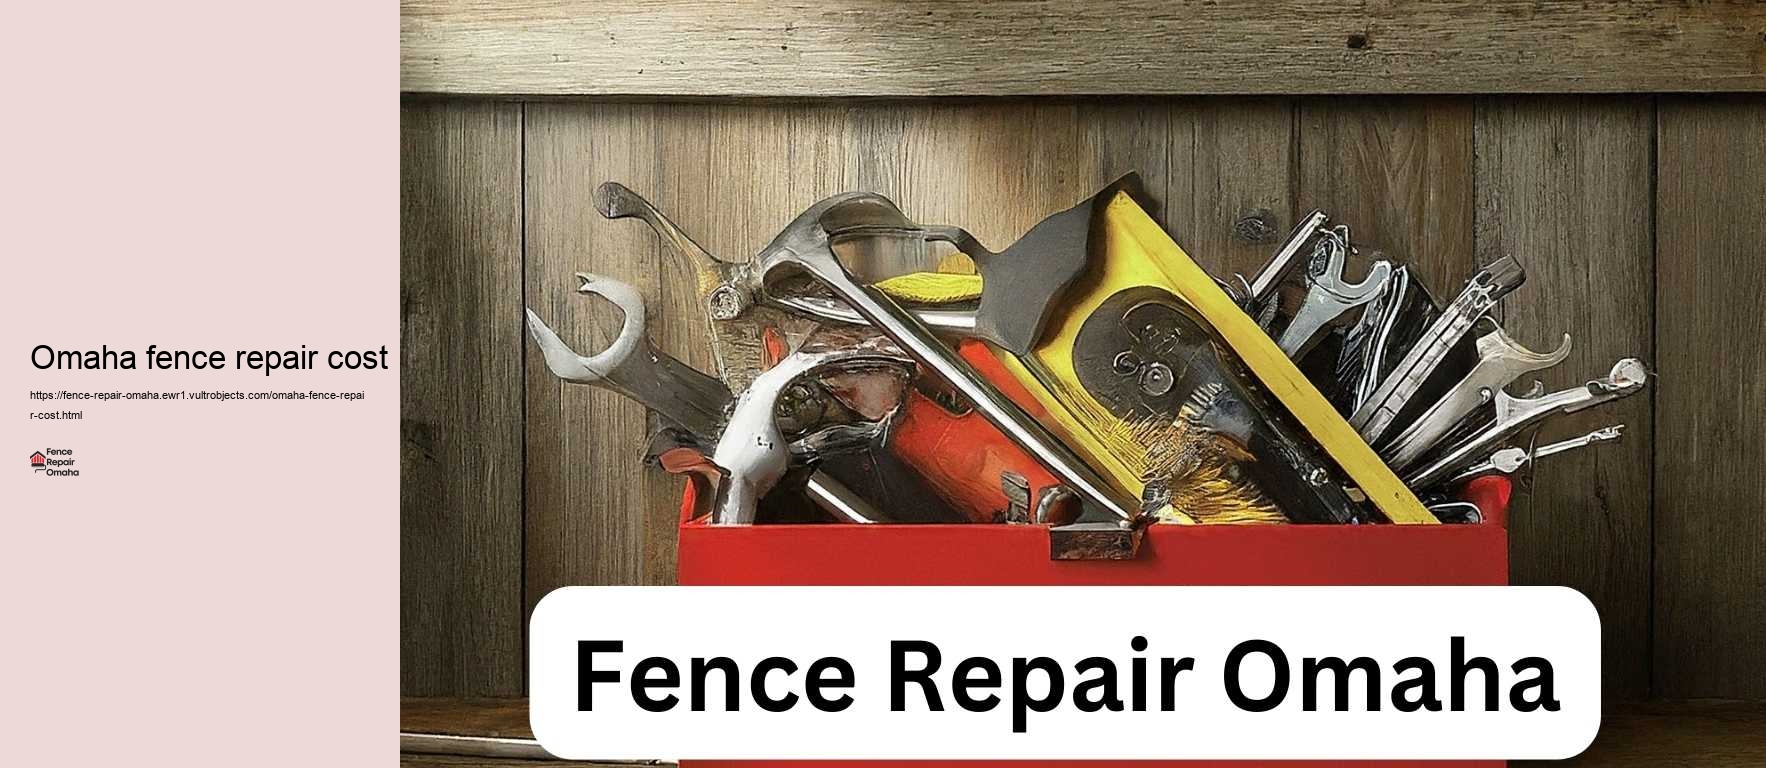 Omaha fence repair cost